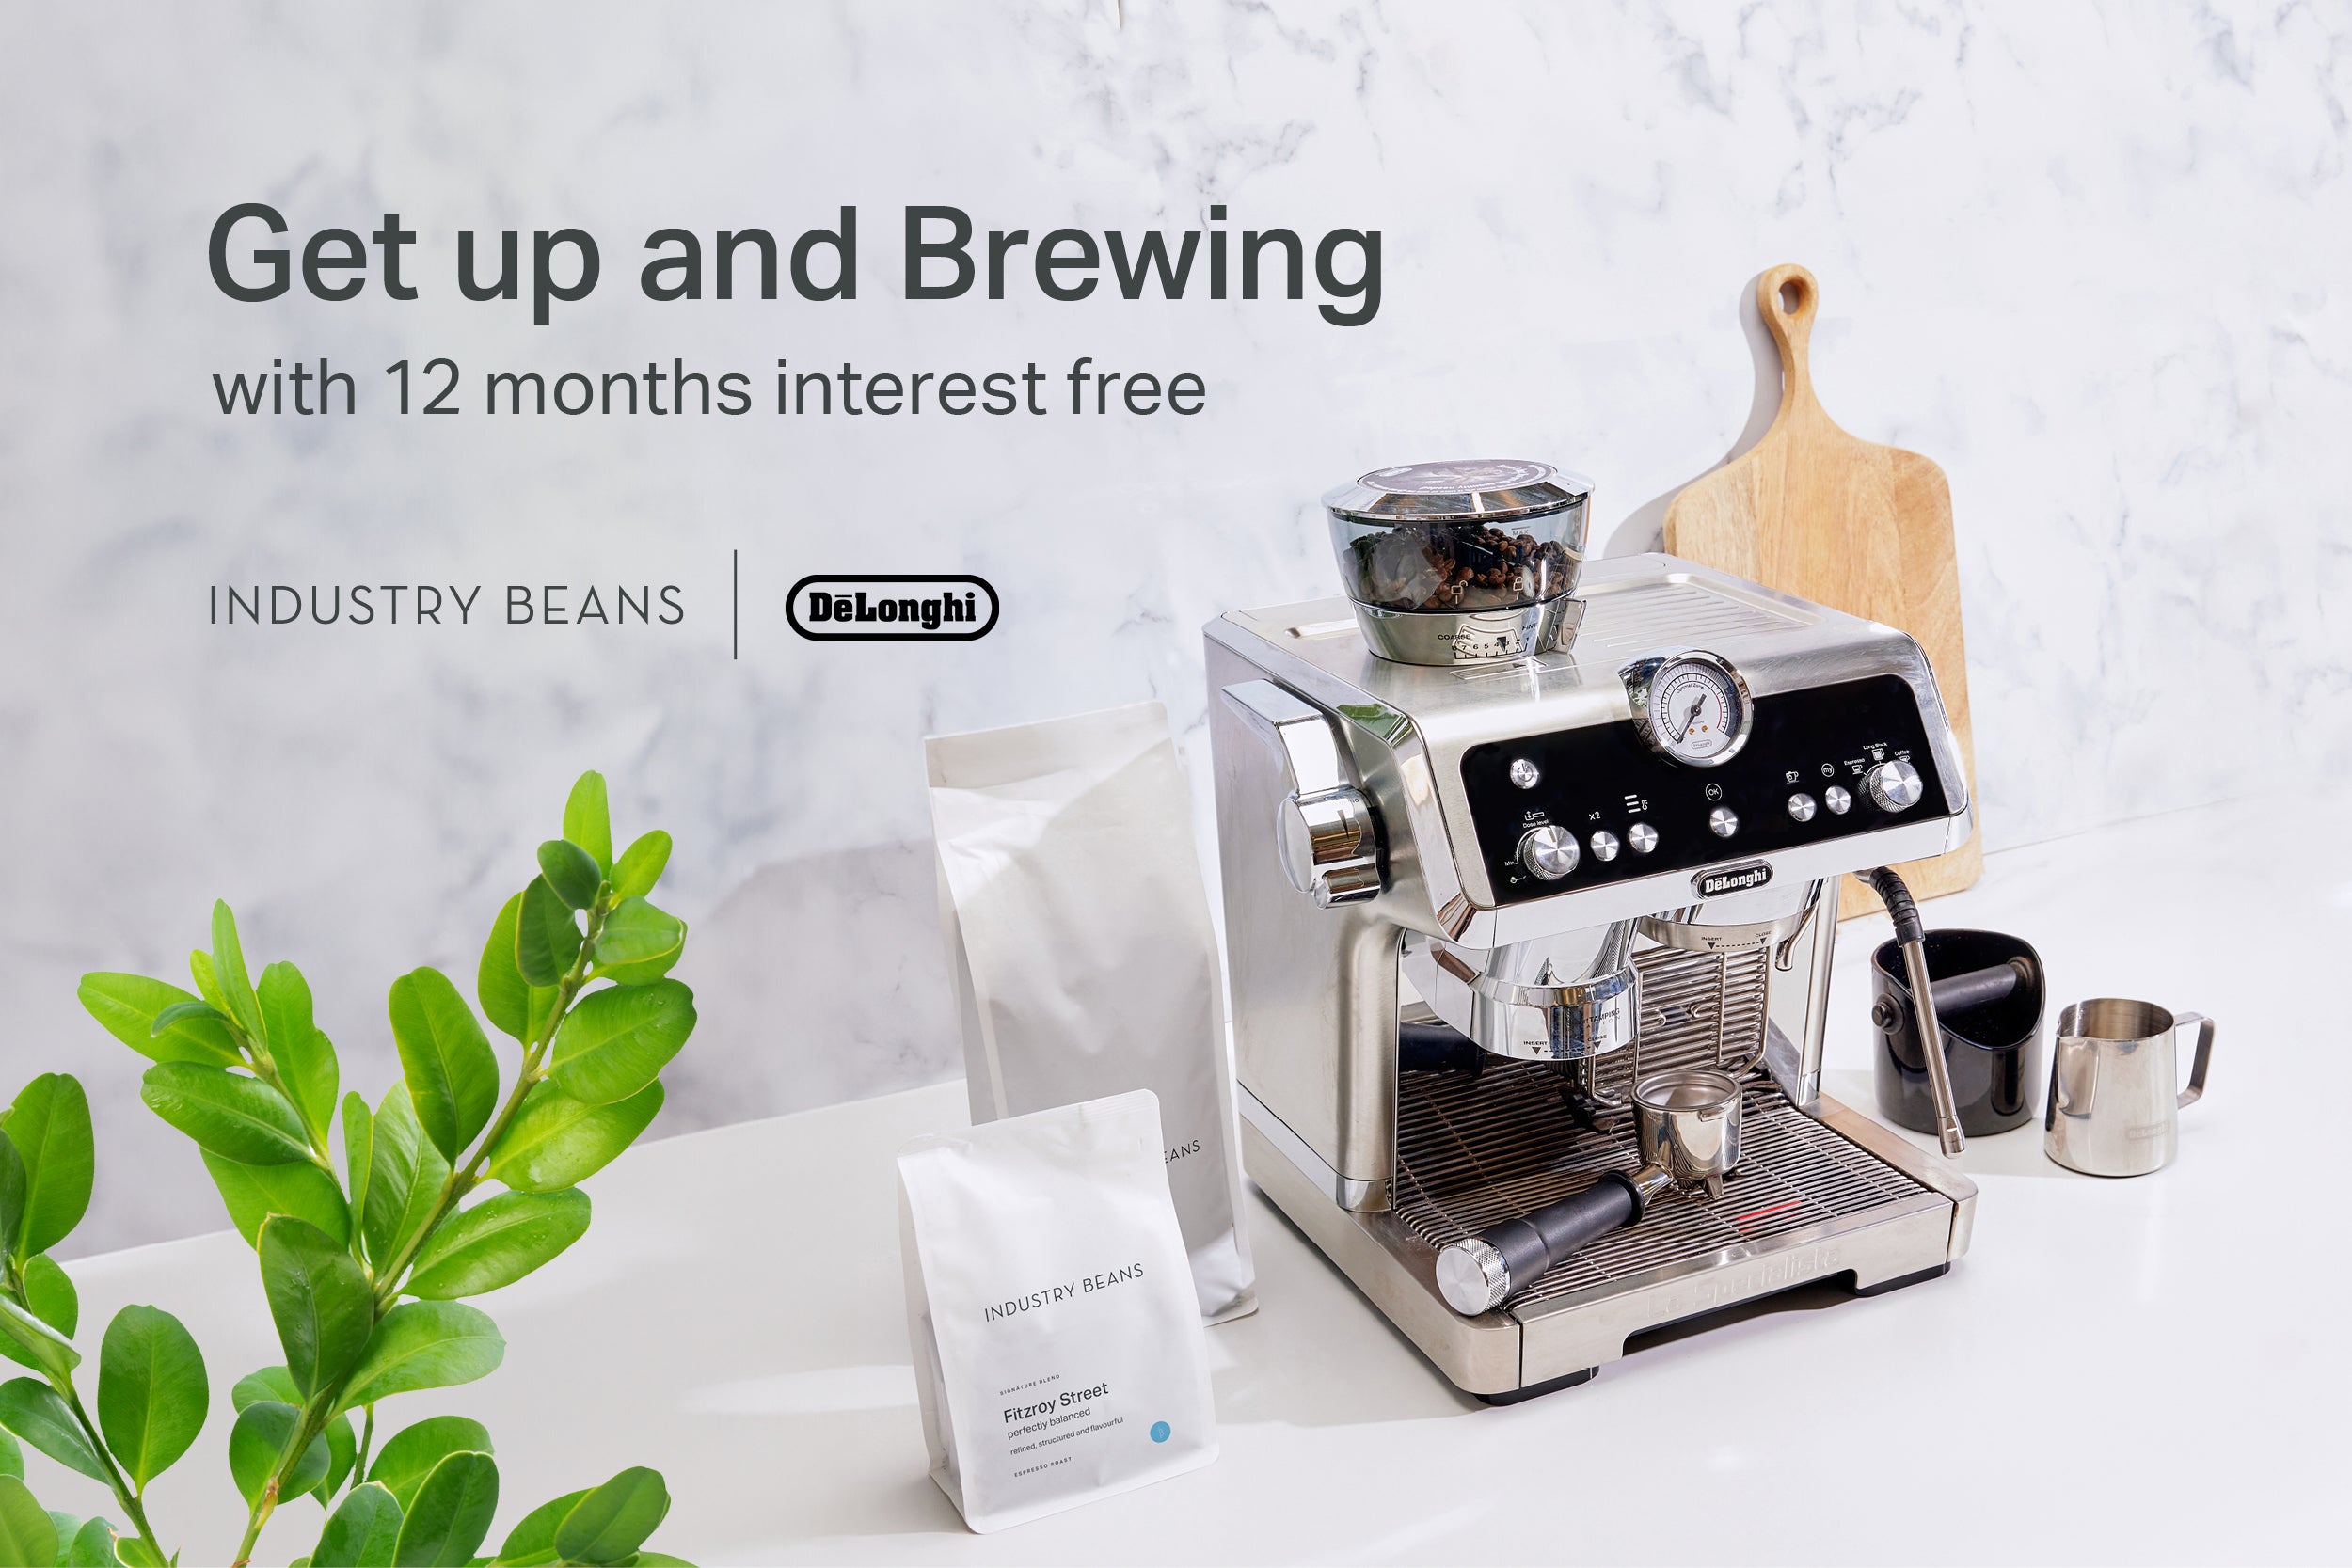 We're the exclusive coffee roaster retail partner of De'Longhi Australia